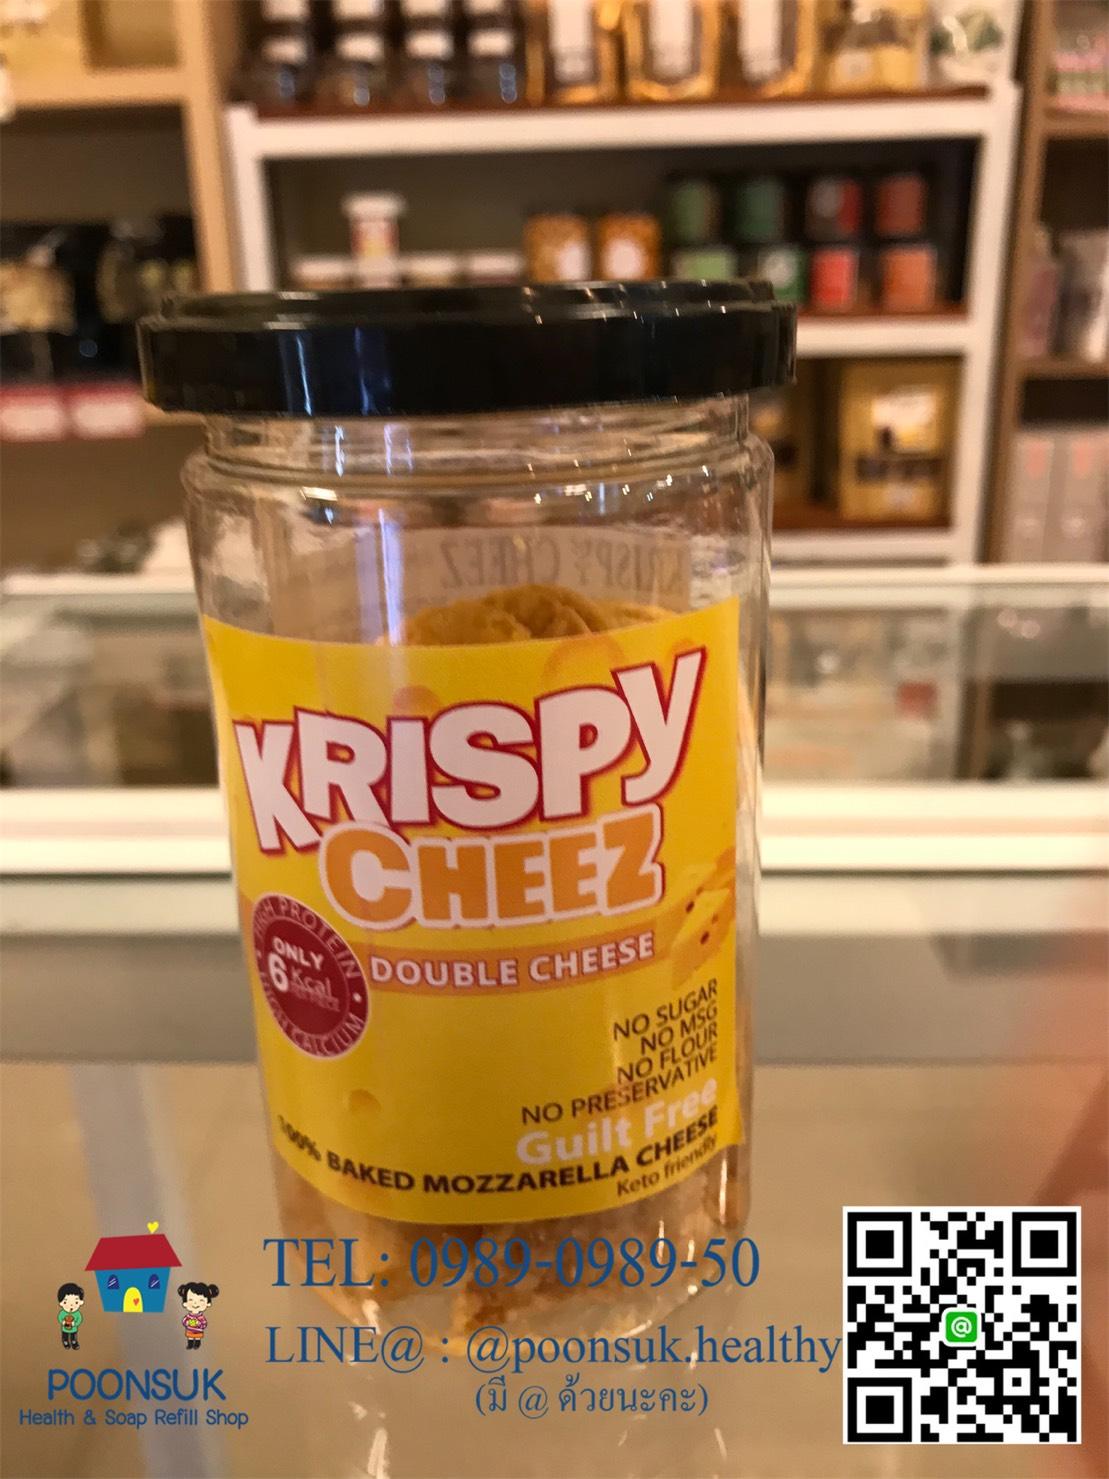 Krispy Cheez keto คริสปี้ ชีส ชีสอบกรอบ double cheese รสดับเบิ้ลชีส ทำจากชีสแท้ๆ 100% ไม่มีแป้ง ไม่มีน้ำตาล ไม่มีผงชูรส คีโต อร่อยได้ไม่กลัวอ้วน 45g